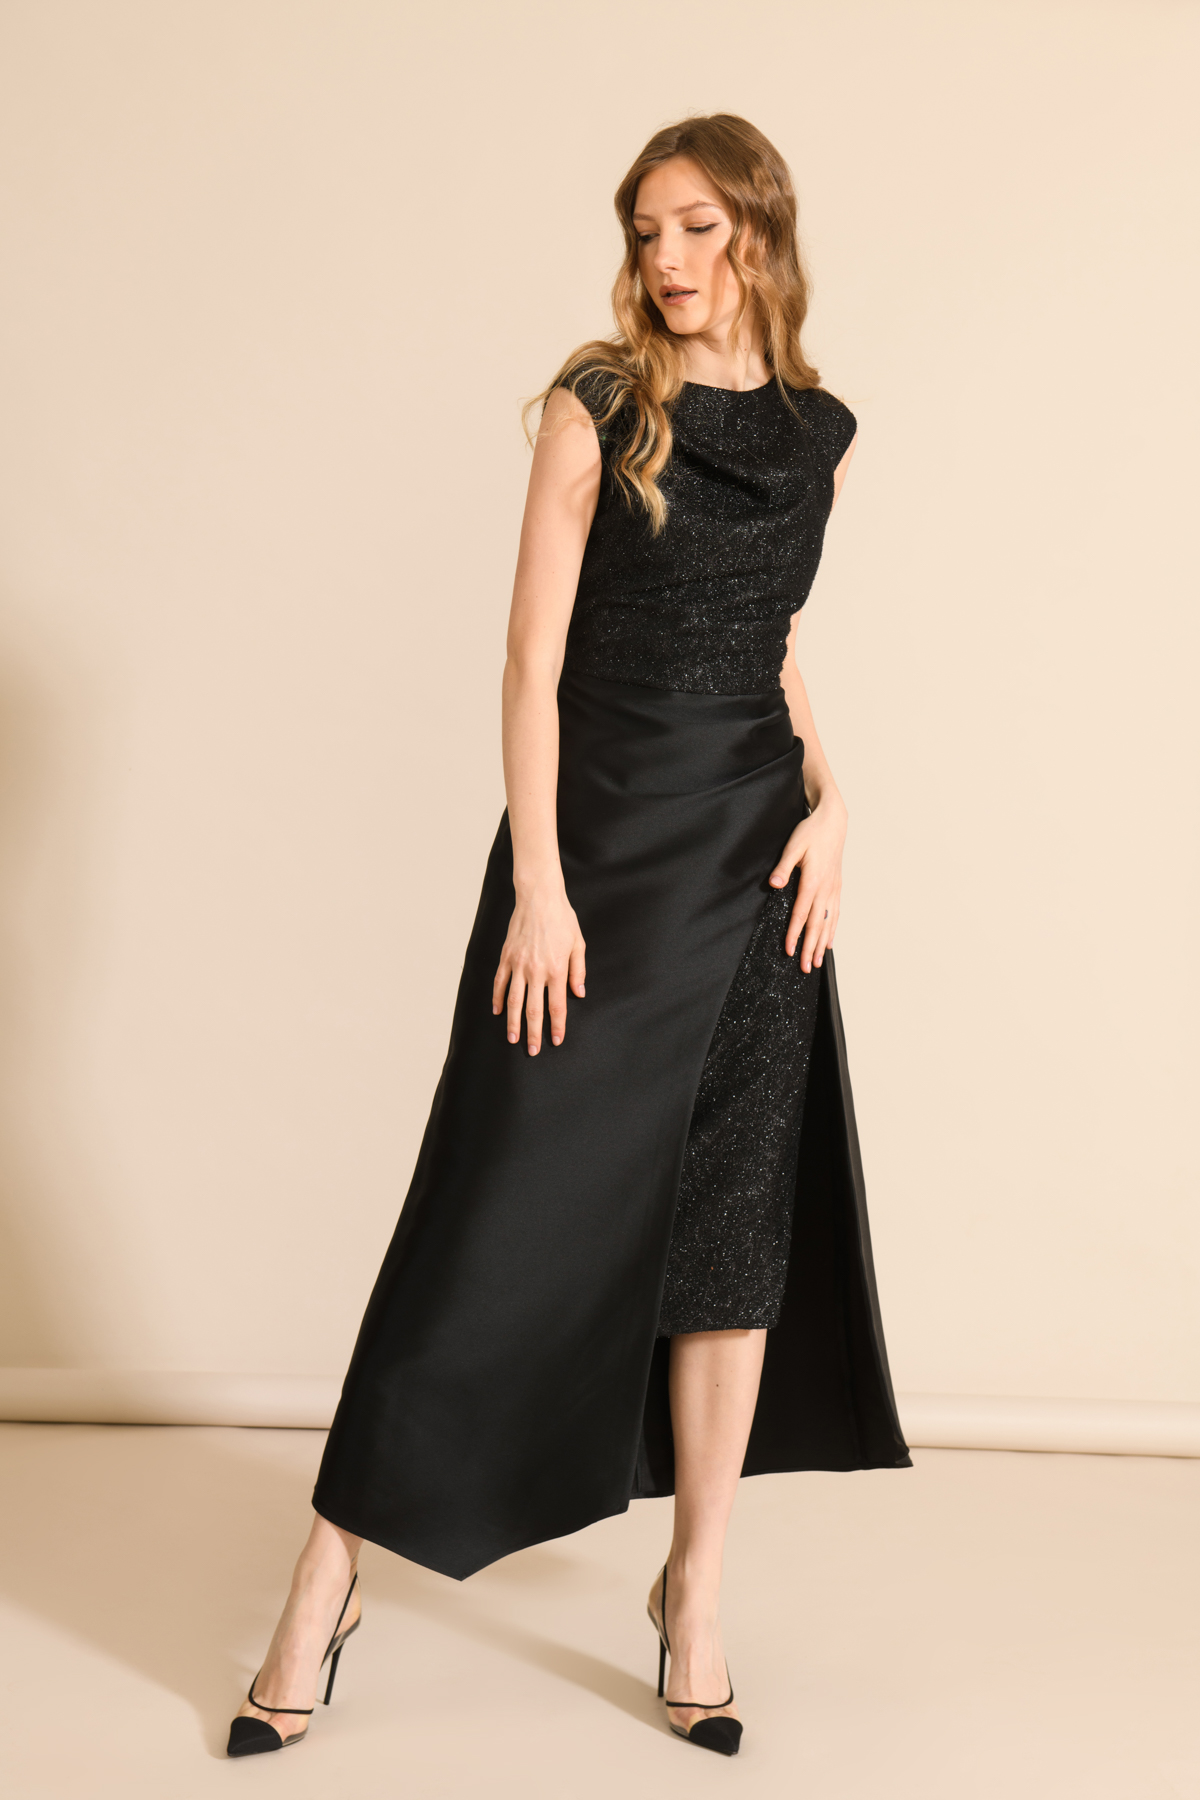 Caroline Kilkenny Levi Sparkle Black Dress